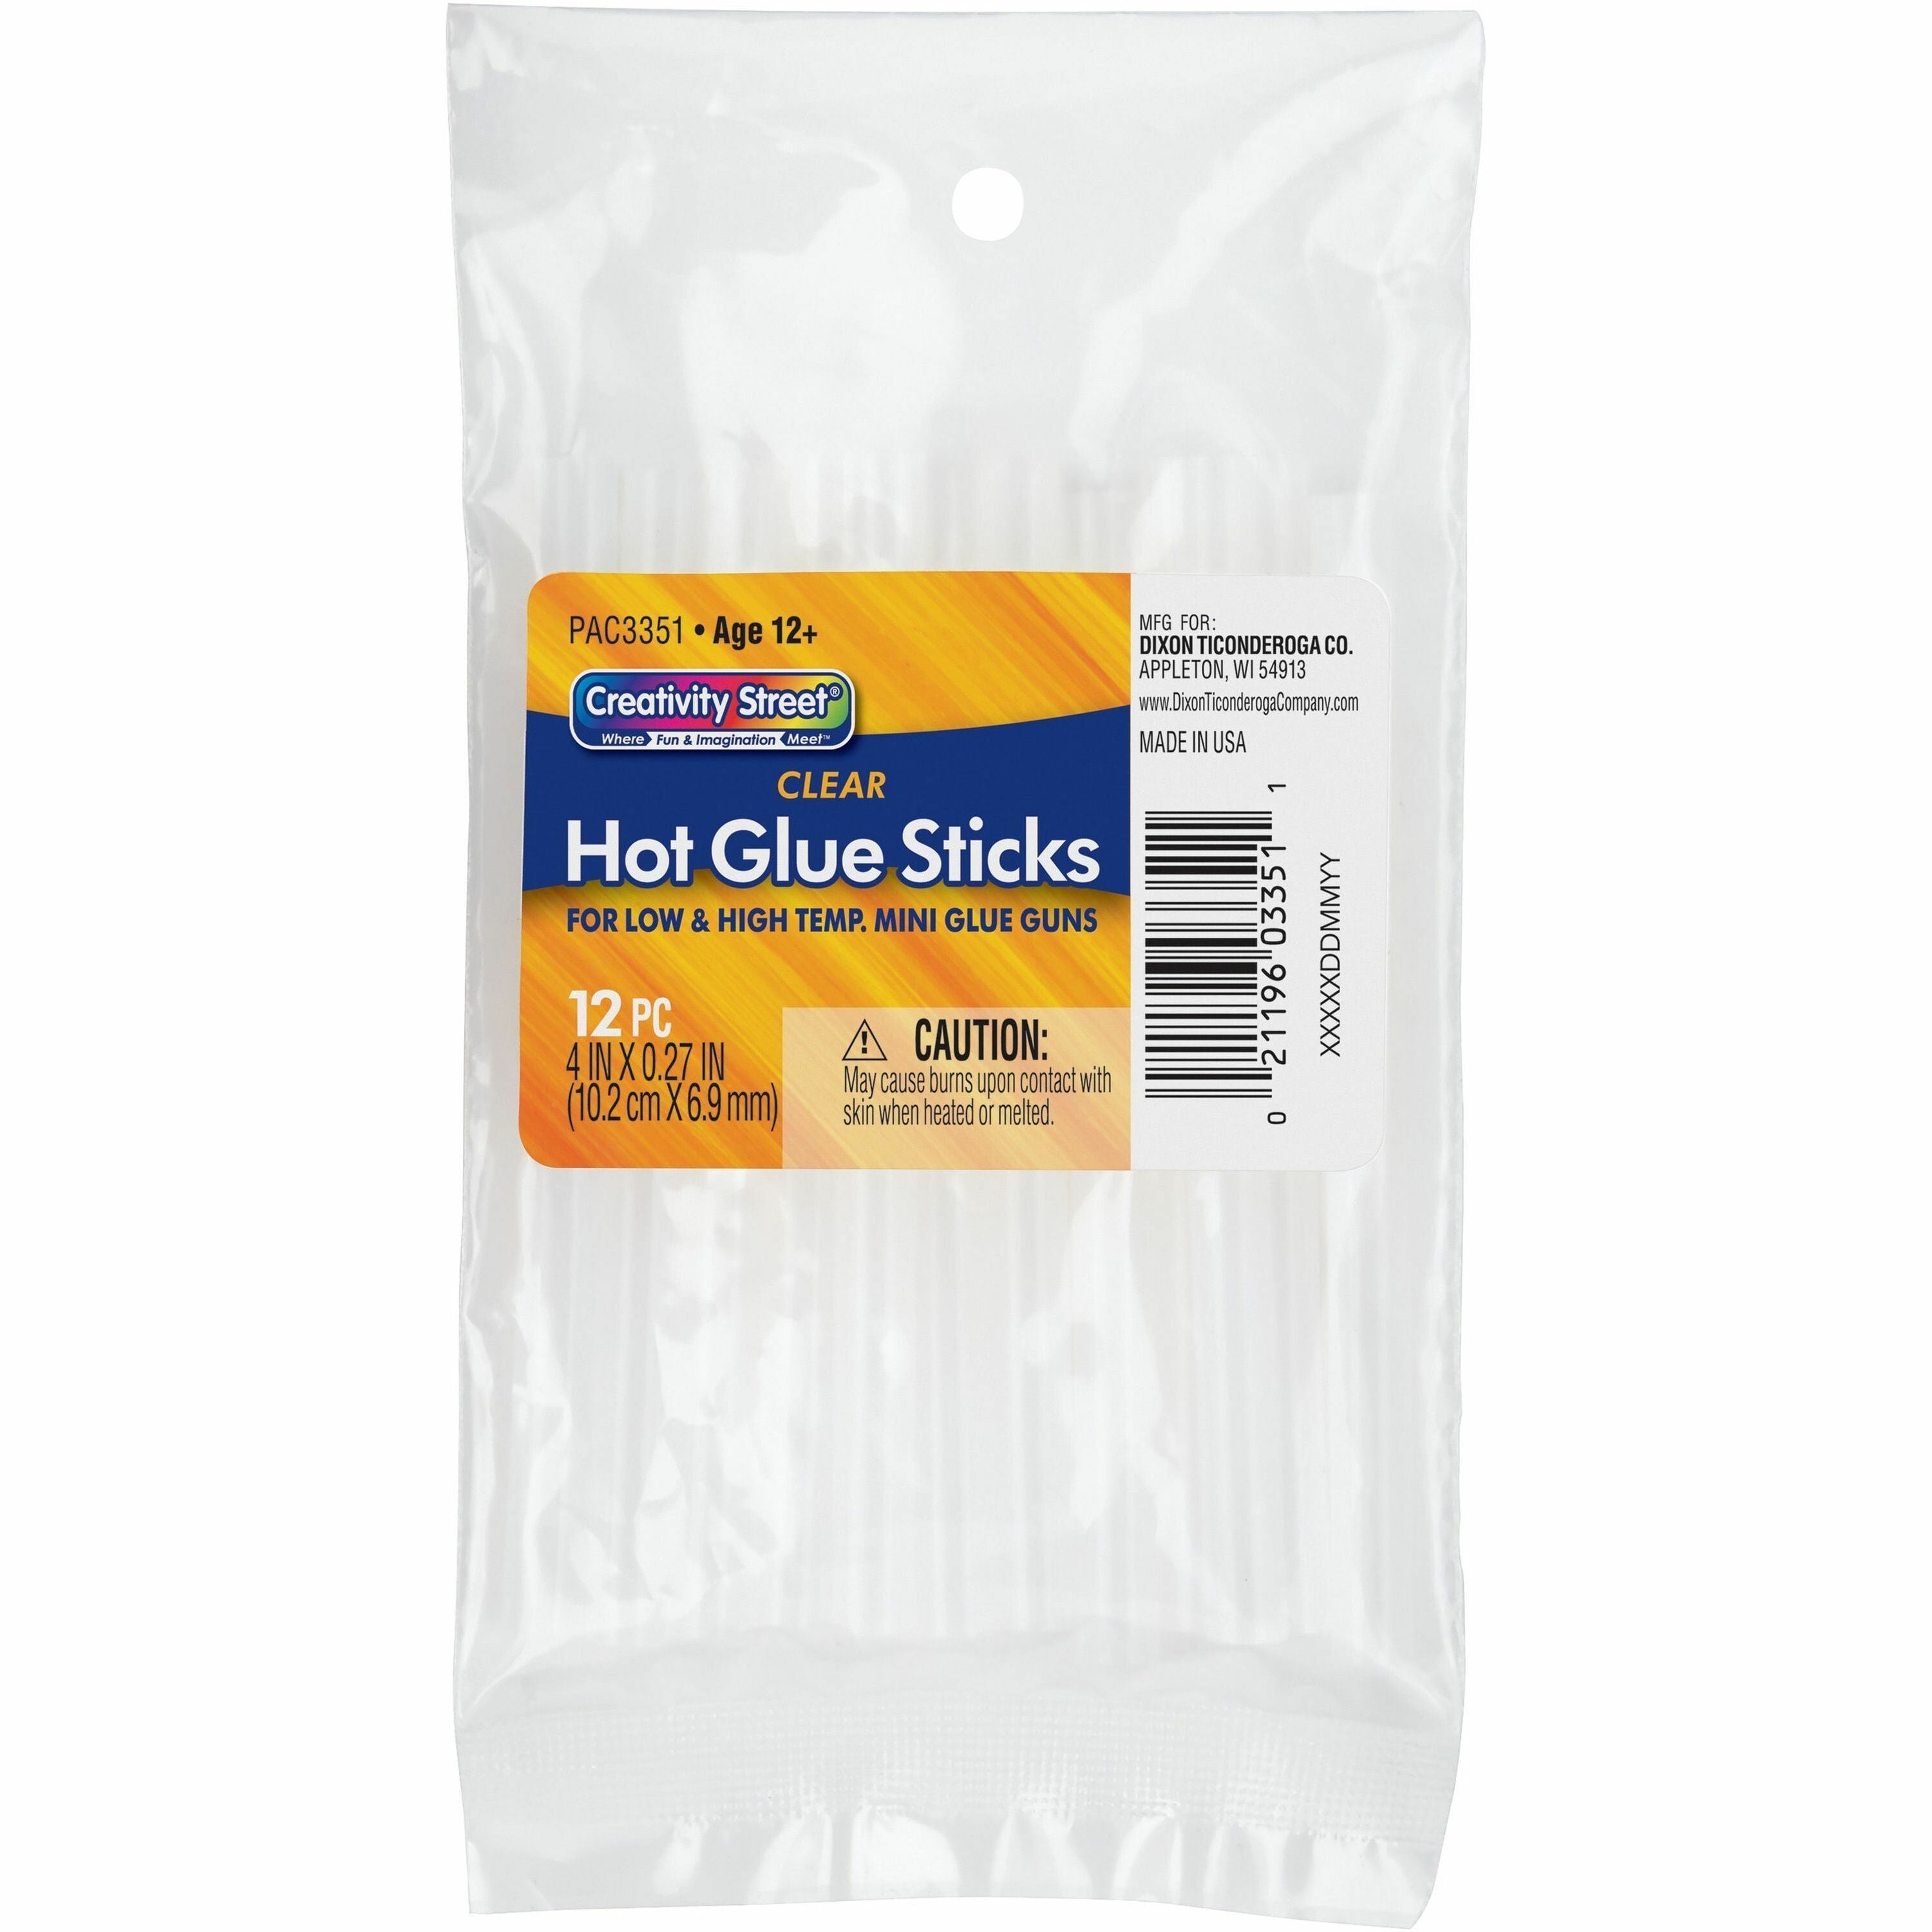 Creativity Street Hot Glue Sticks - 12 / Pack - Clear - 1